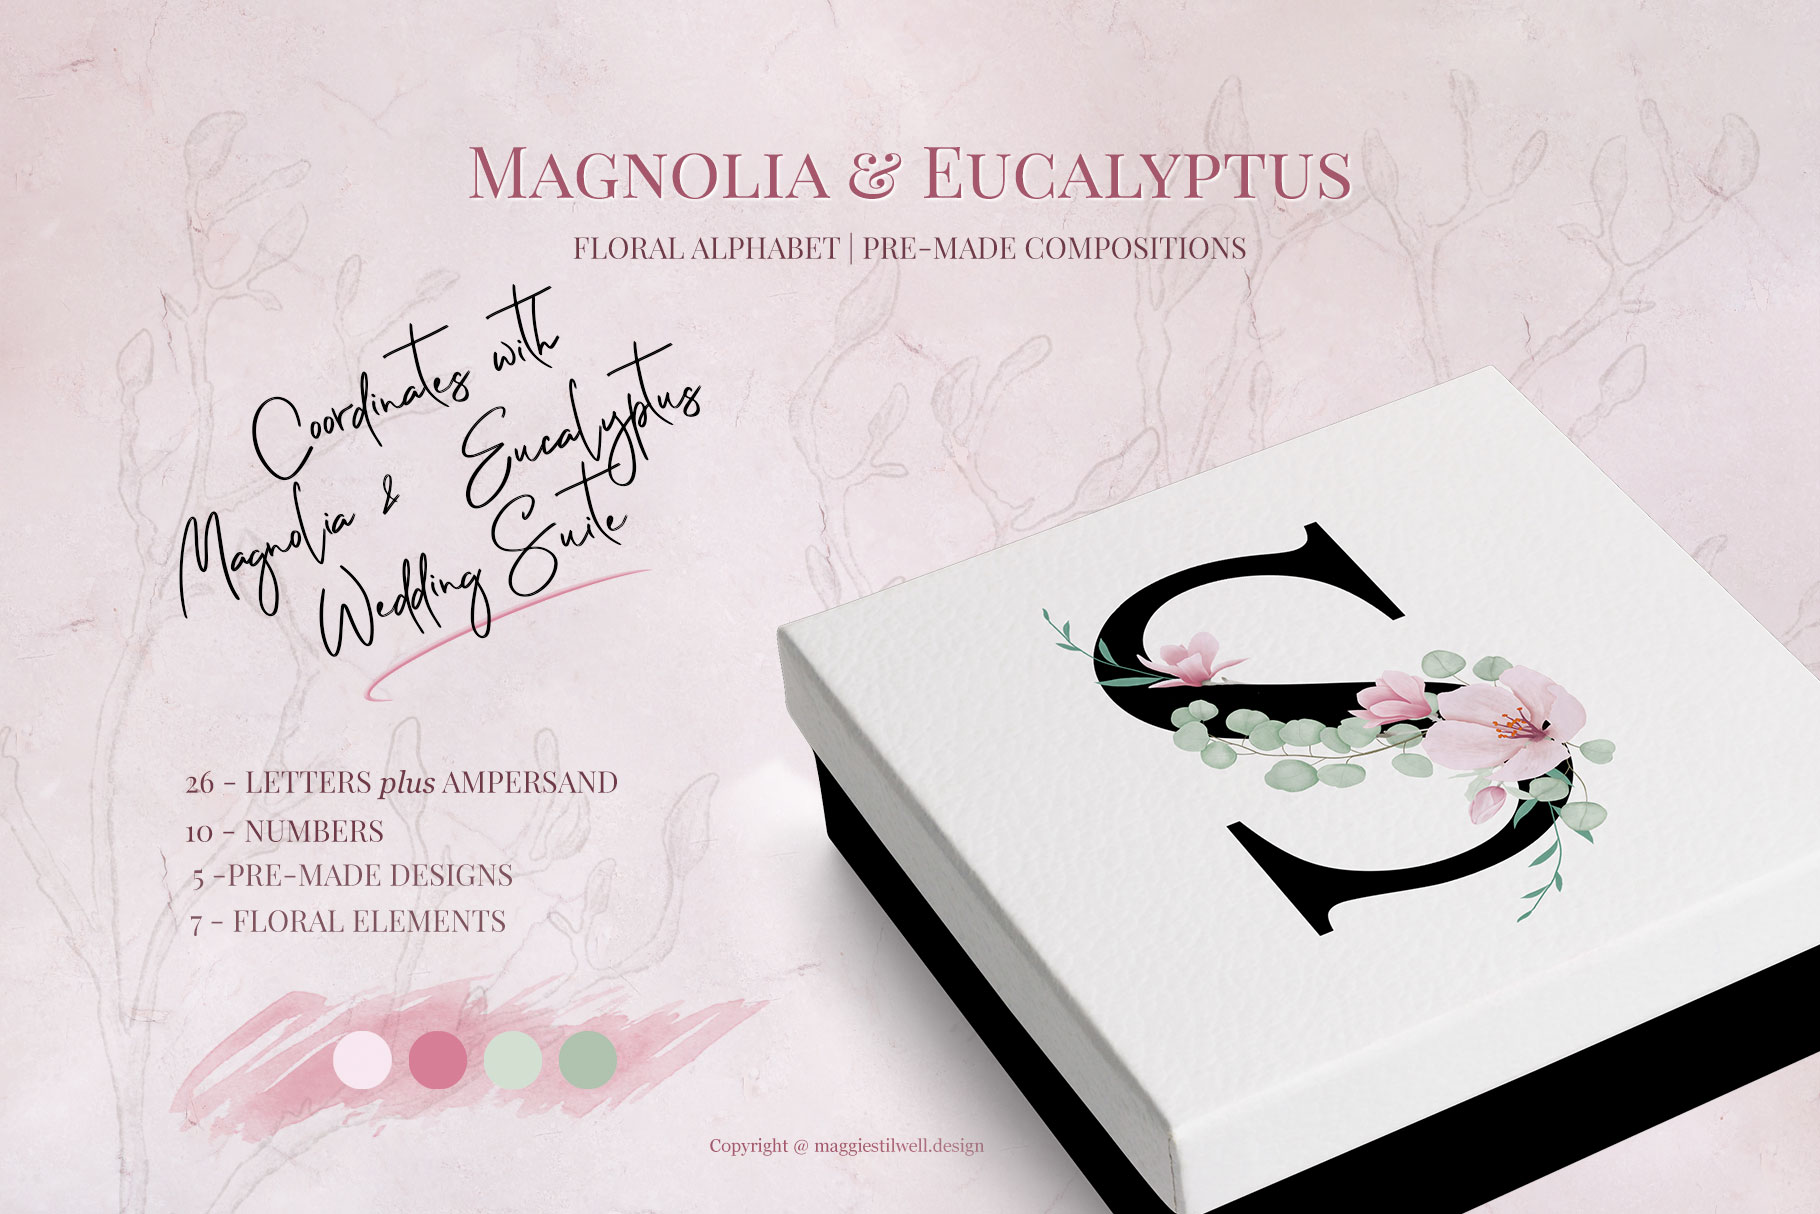 Magnolia & Eucalyptus Floral Alphabet